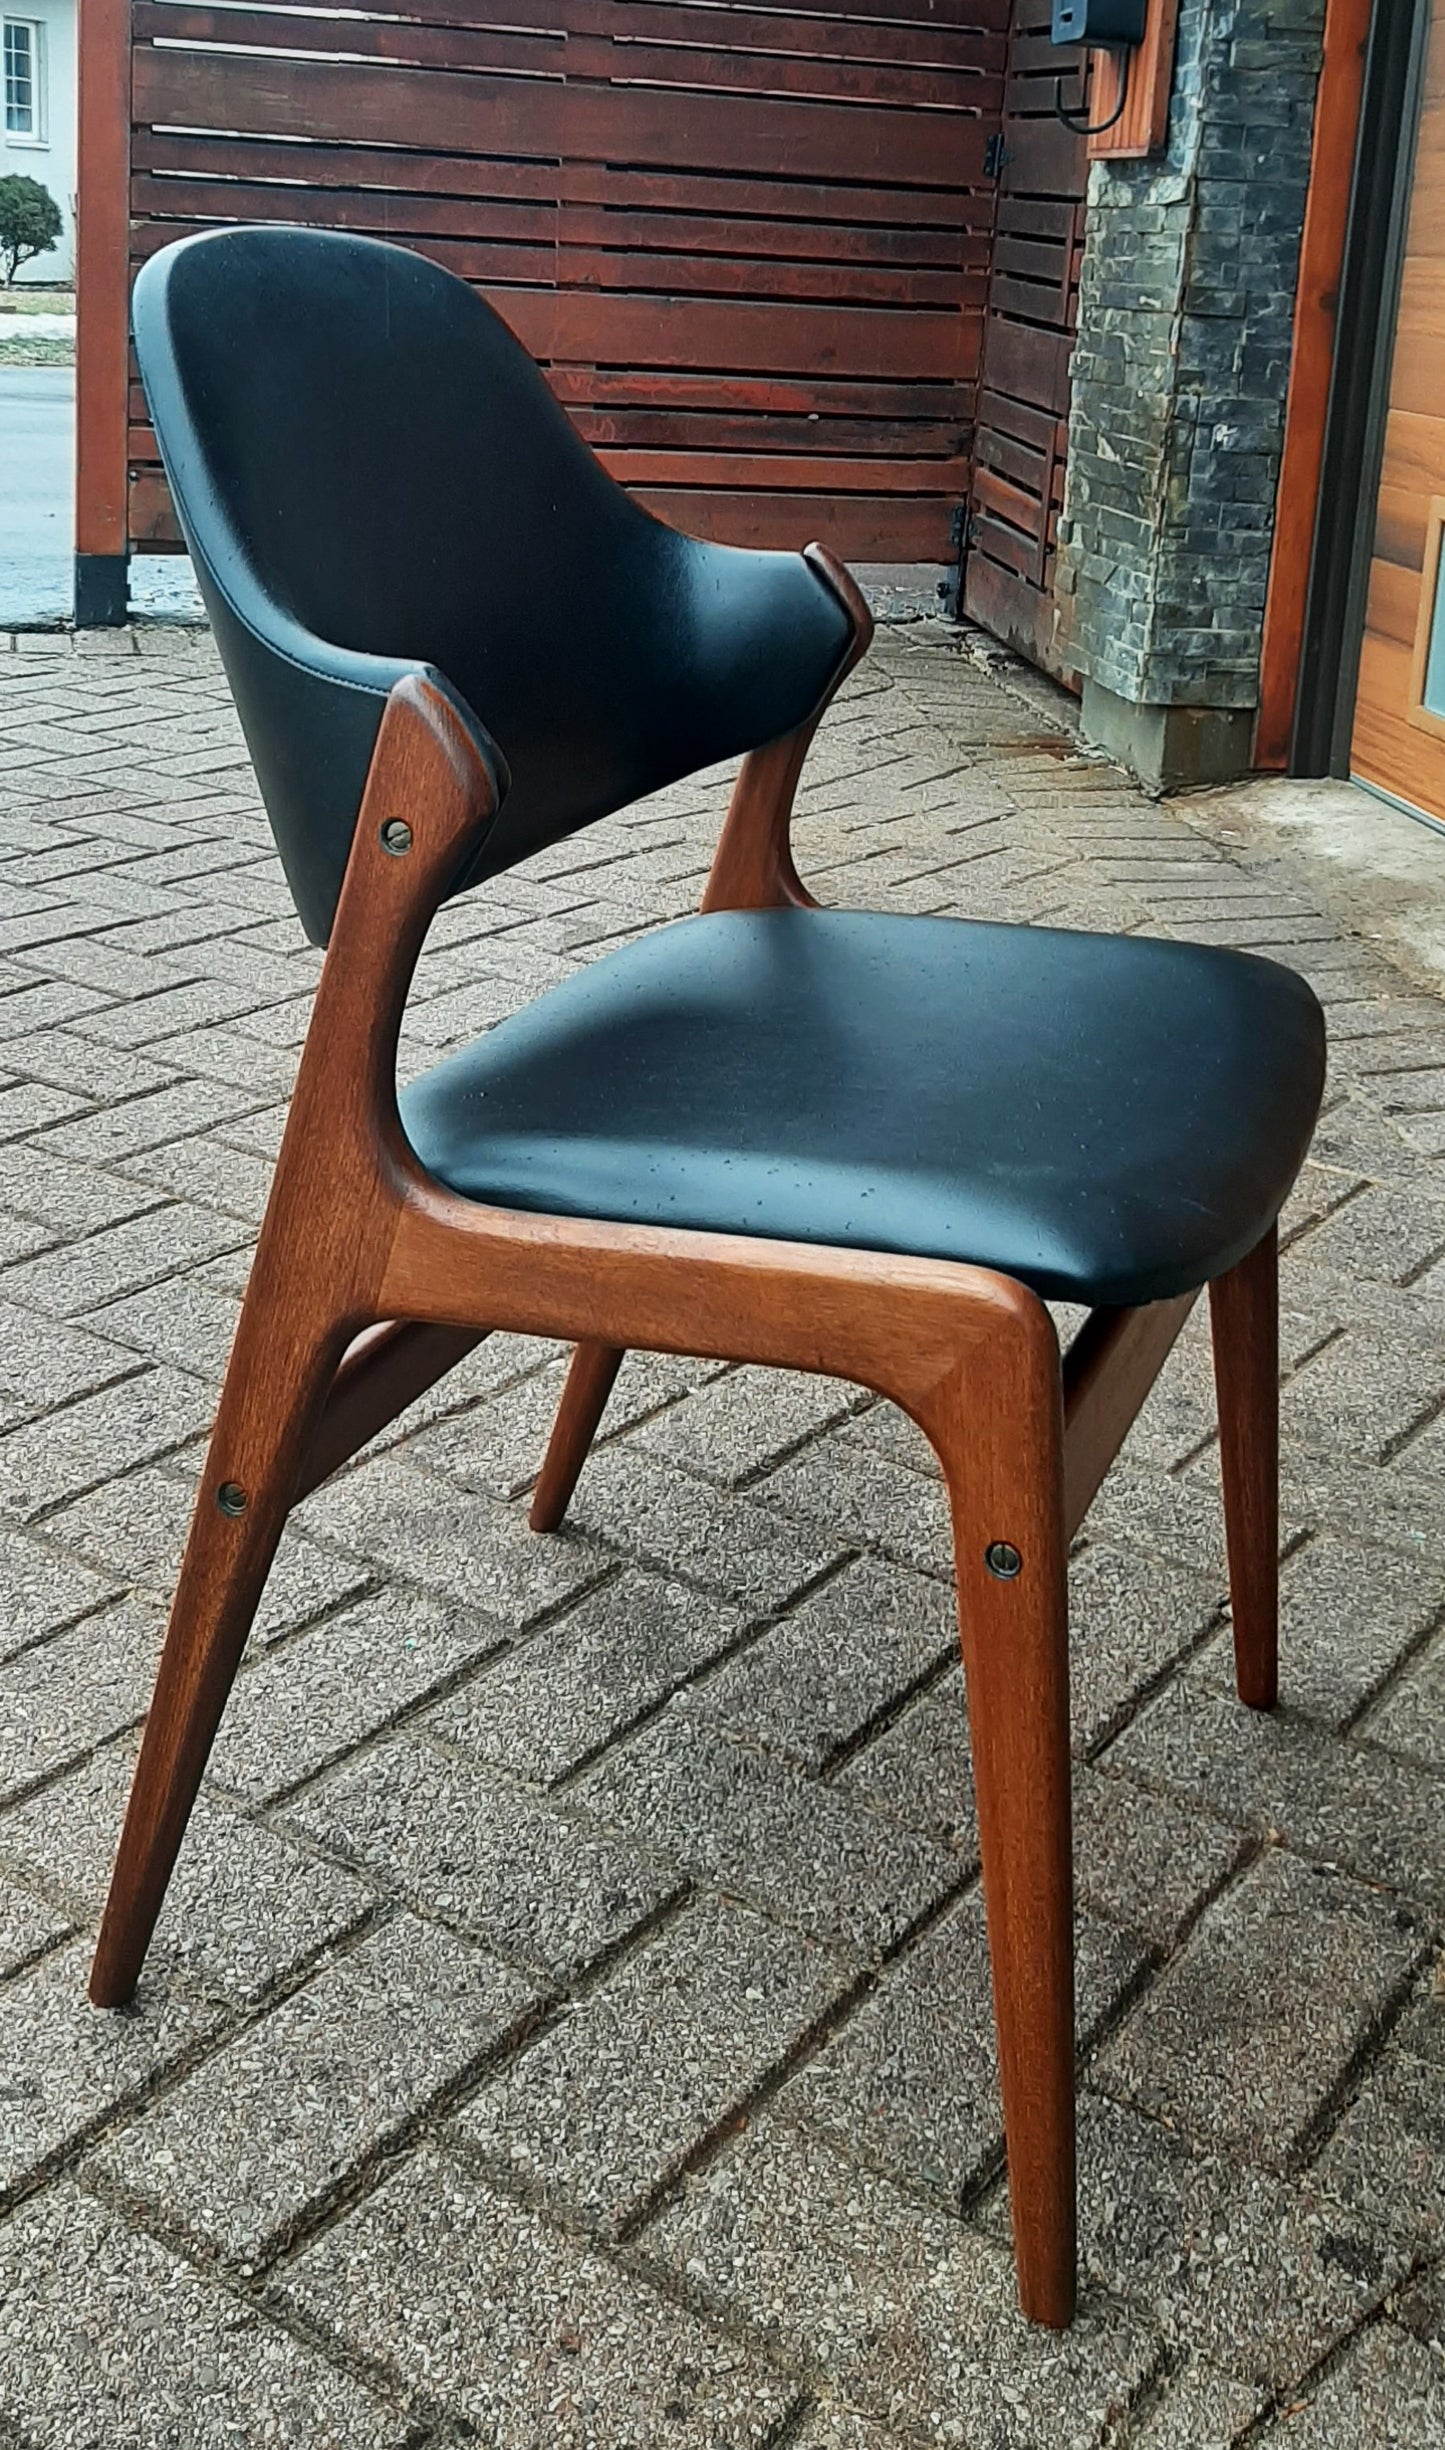 REFINISHED Danish Mid-Century Modern Teak Chair by Ejvind A. Johansson for Gern Mobelfabrik